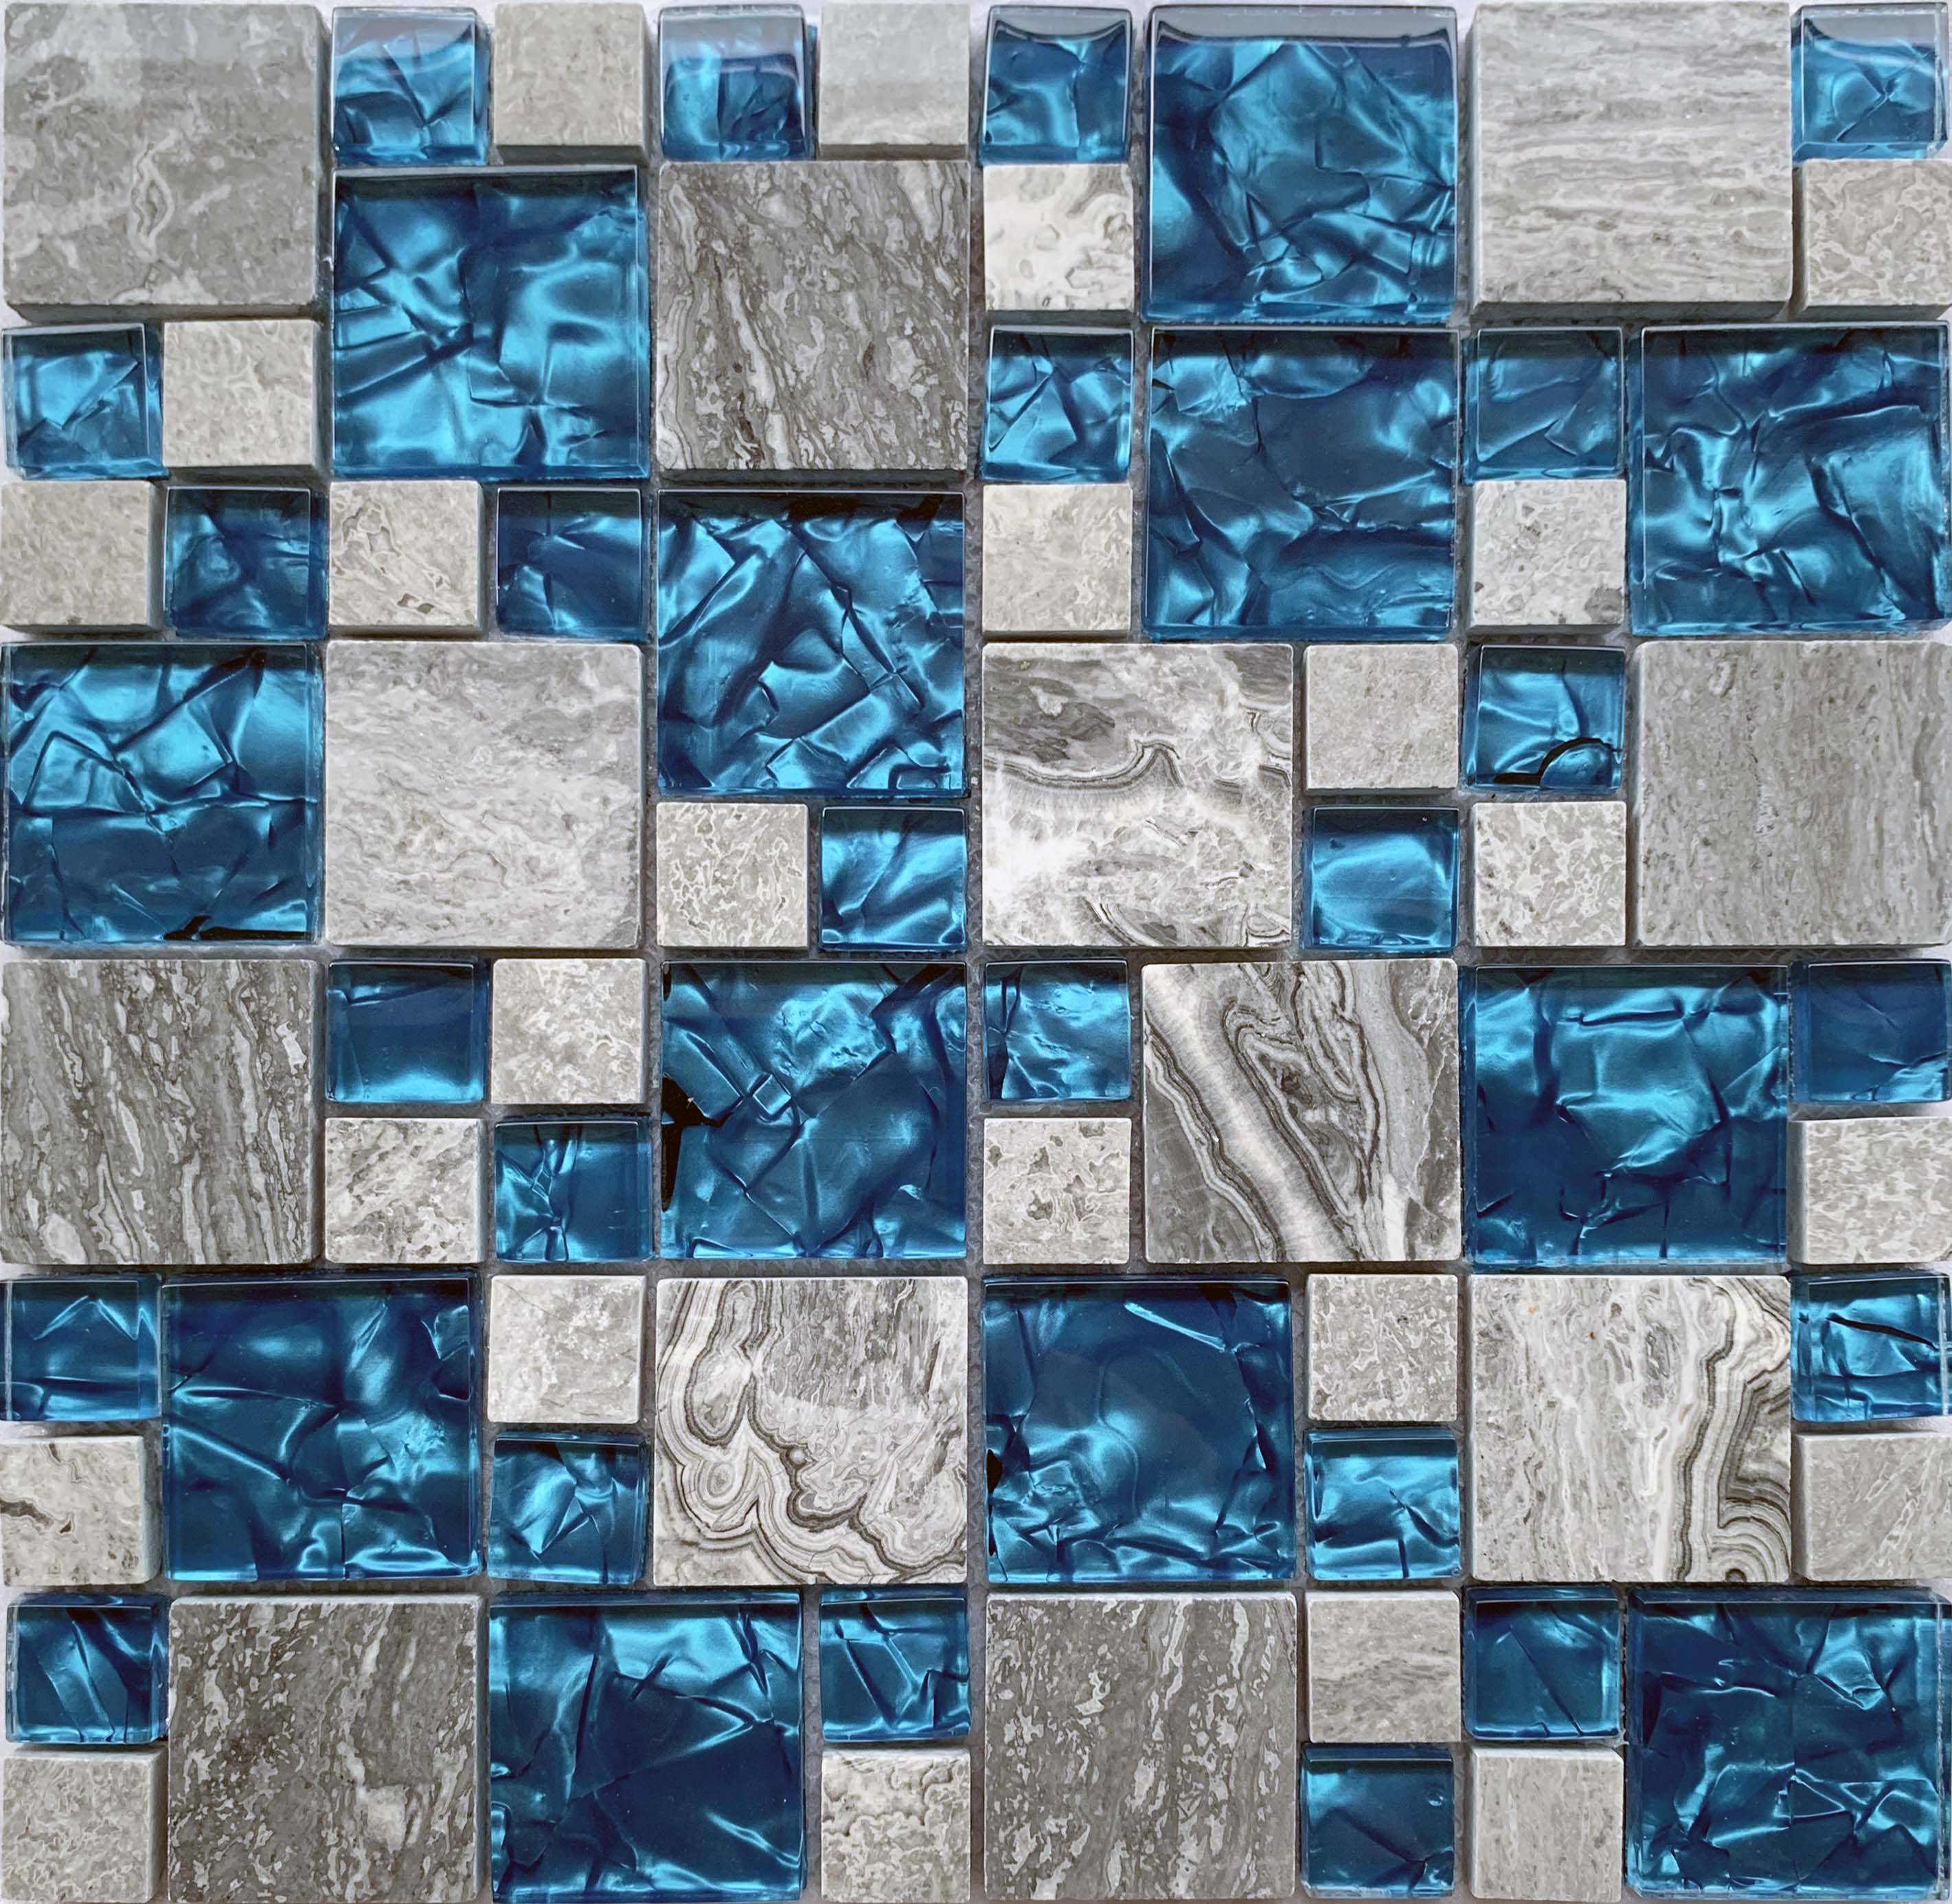 Gray and Teal Backsplash Tile Mixed Marble & Glass Mosaic Wall Tiles